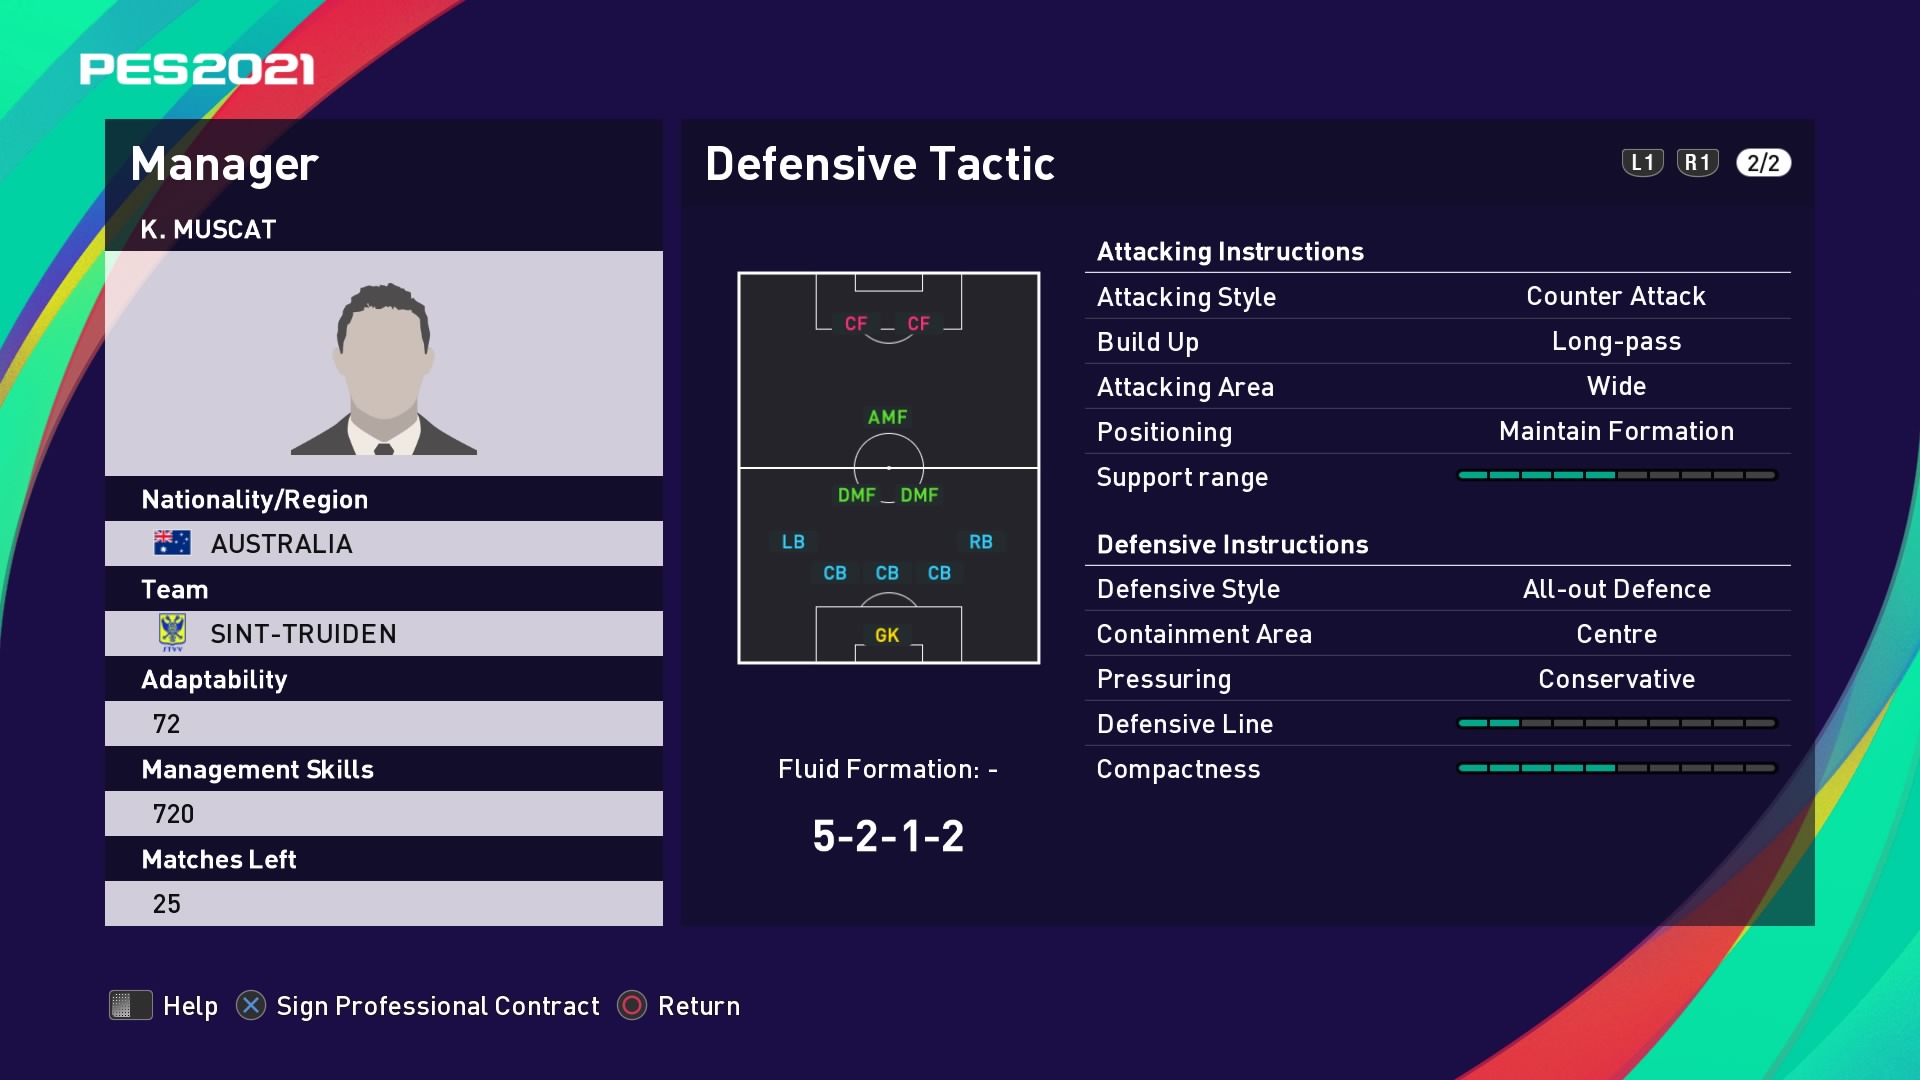 K. Muscat (Kevin Muscat) Defensive Tactic in PES 2021 myClub